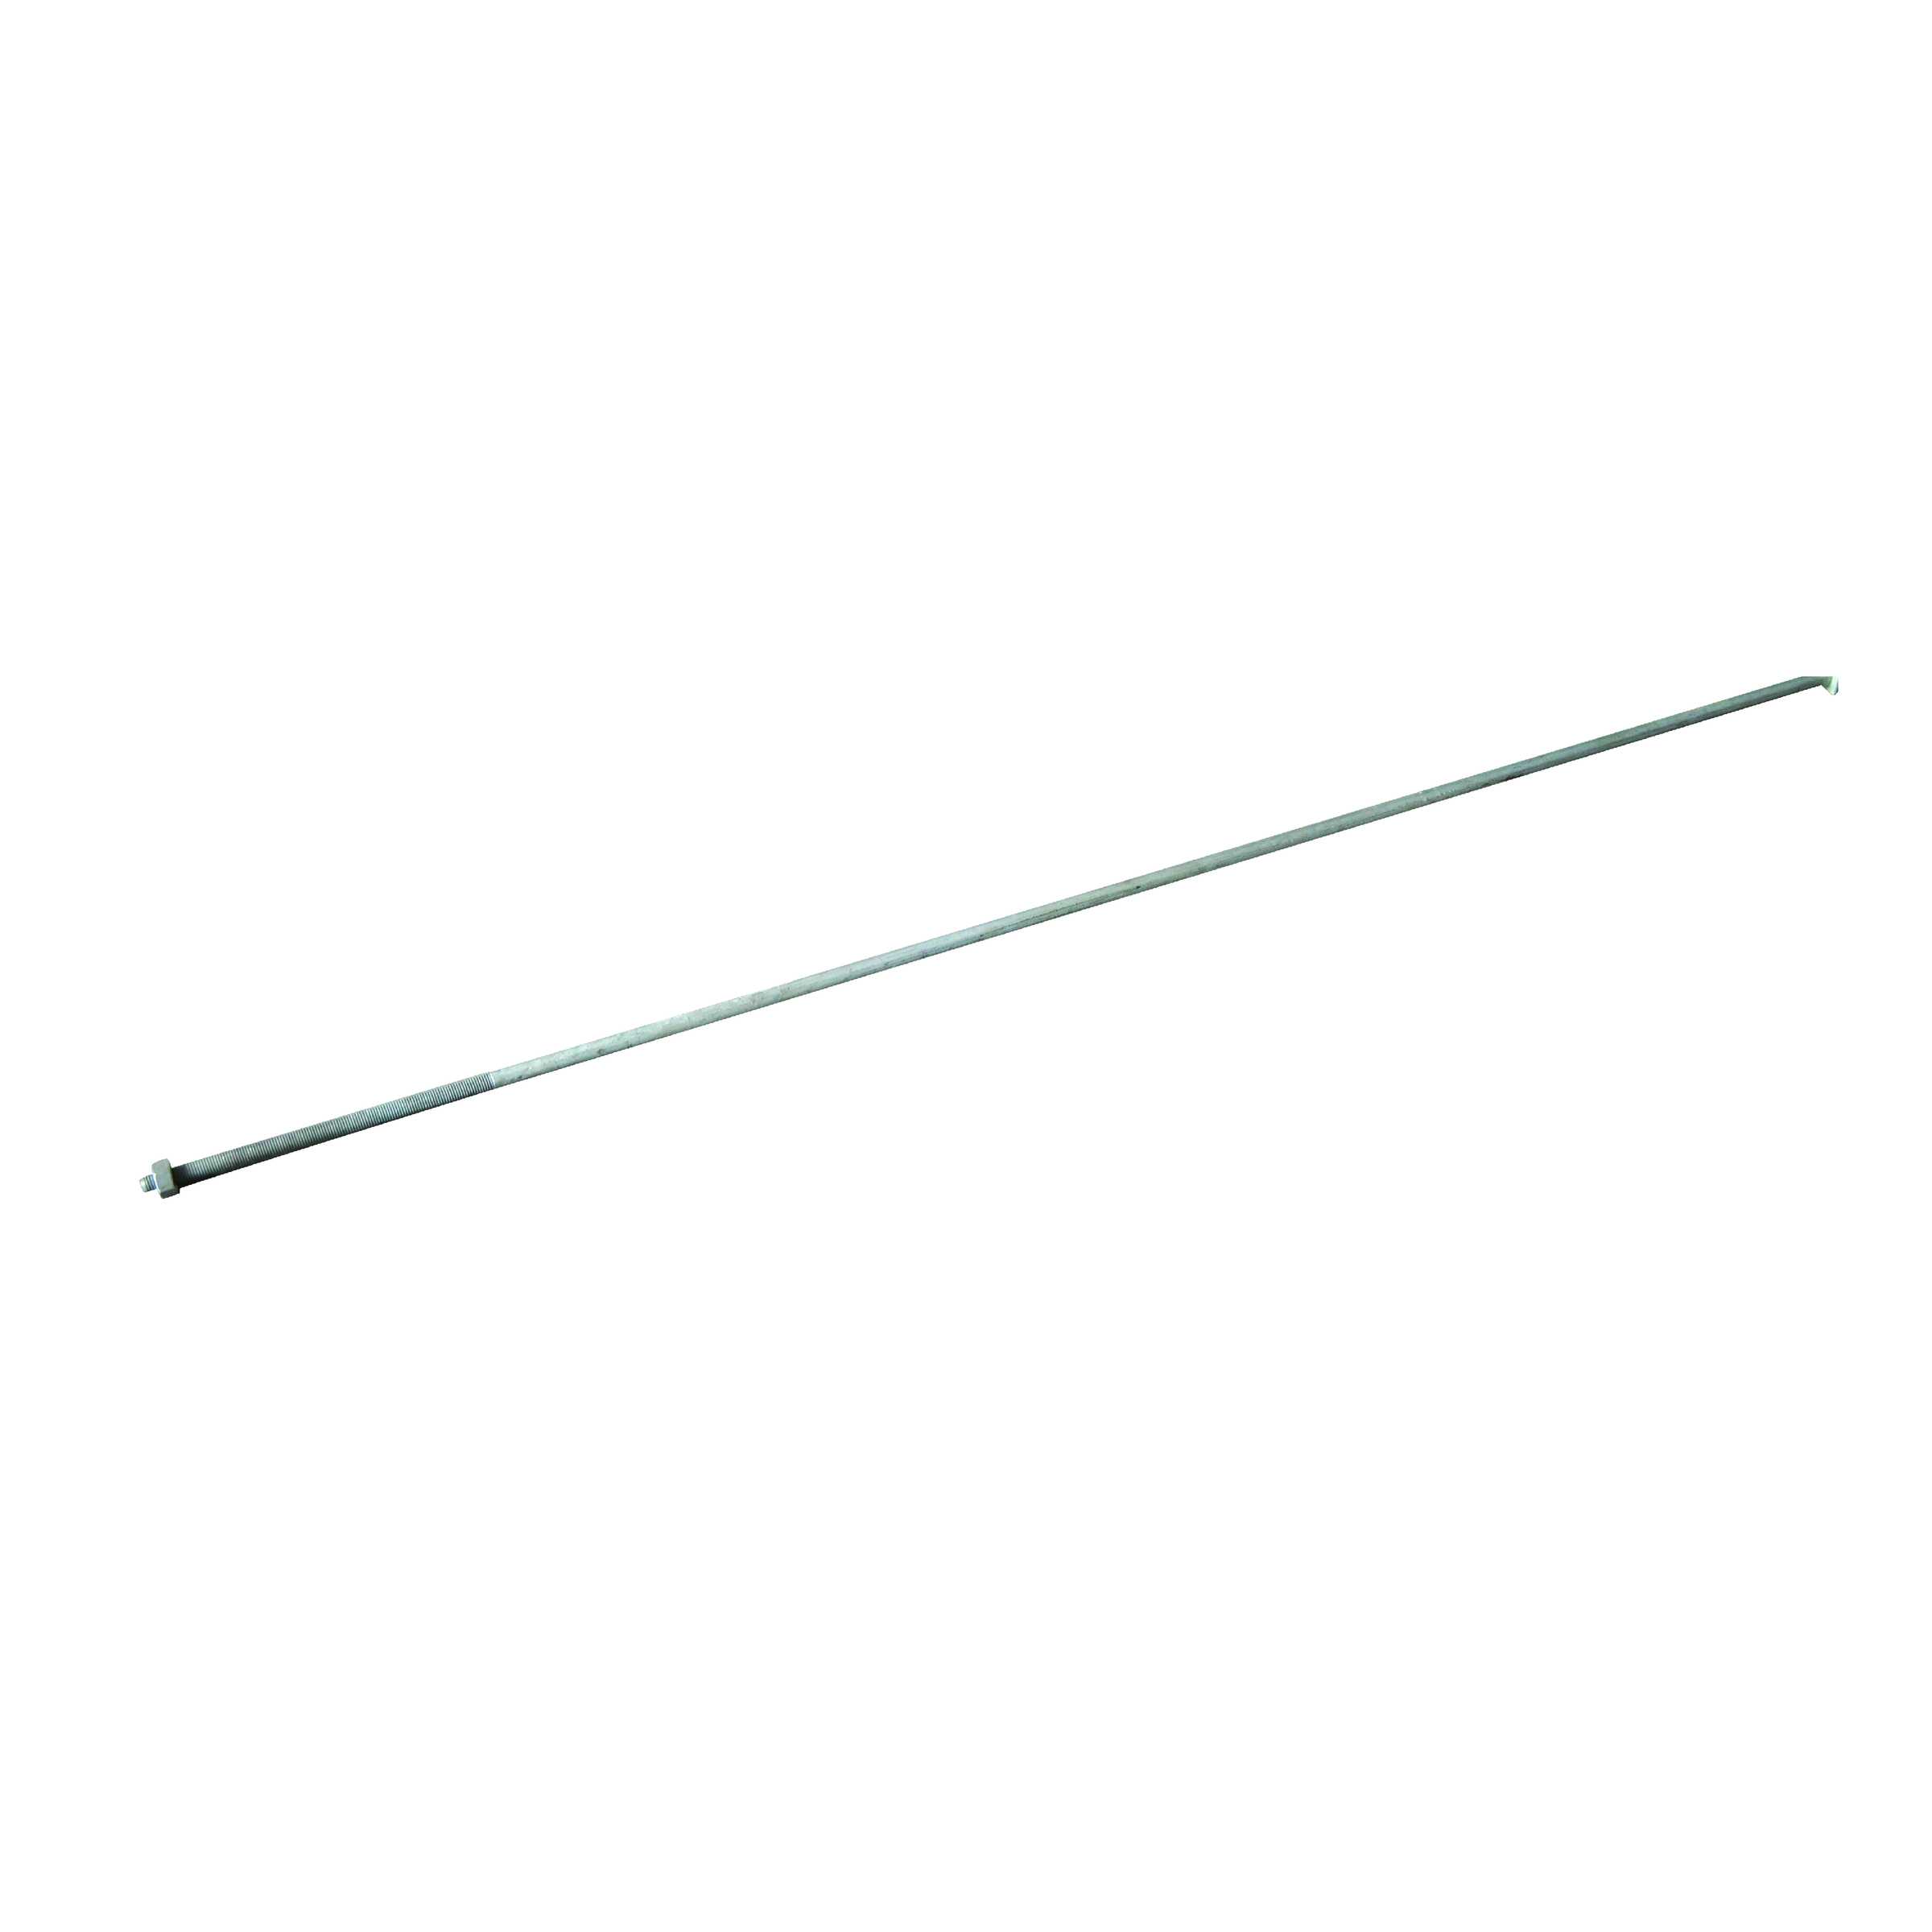 Fiber Optic_Overhead Pole Accessories_rod for say bow.jpg